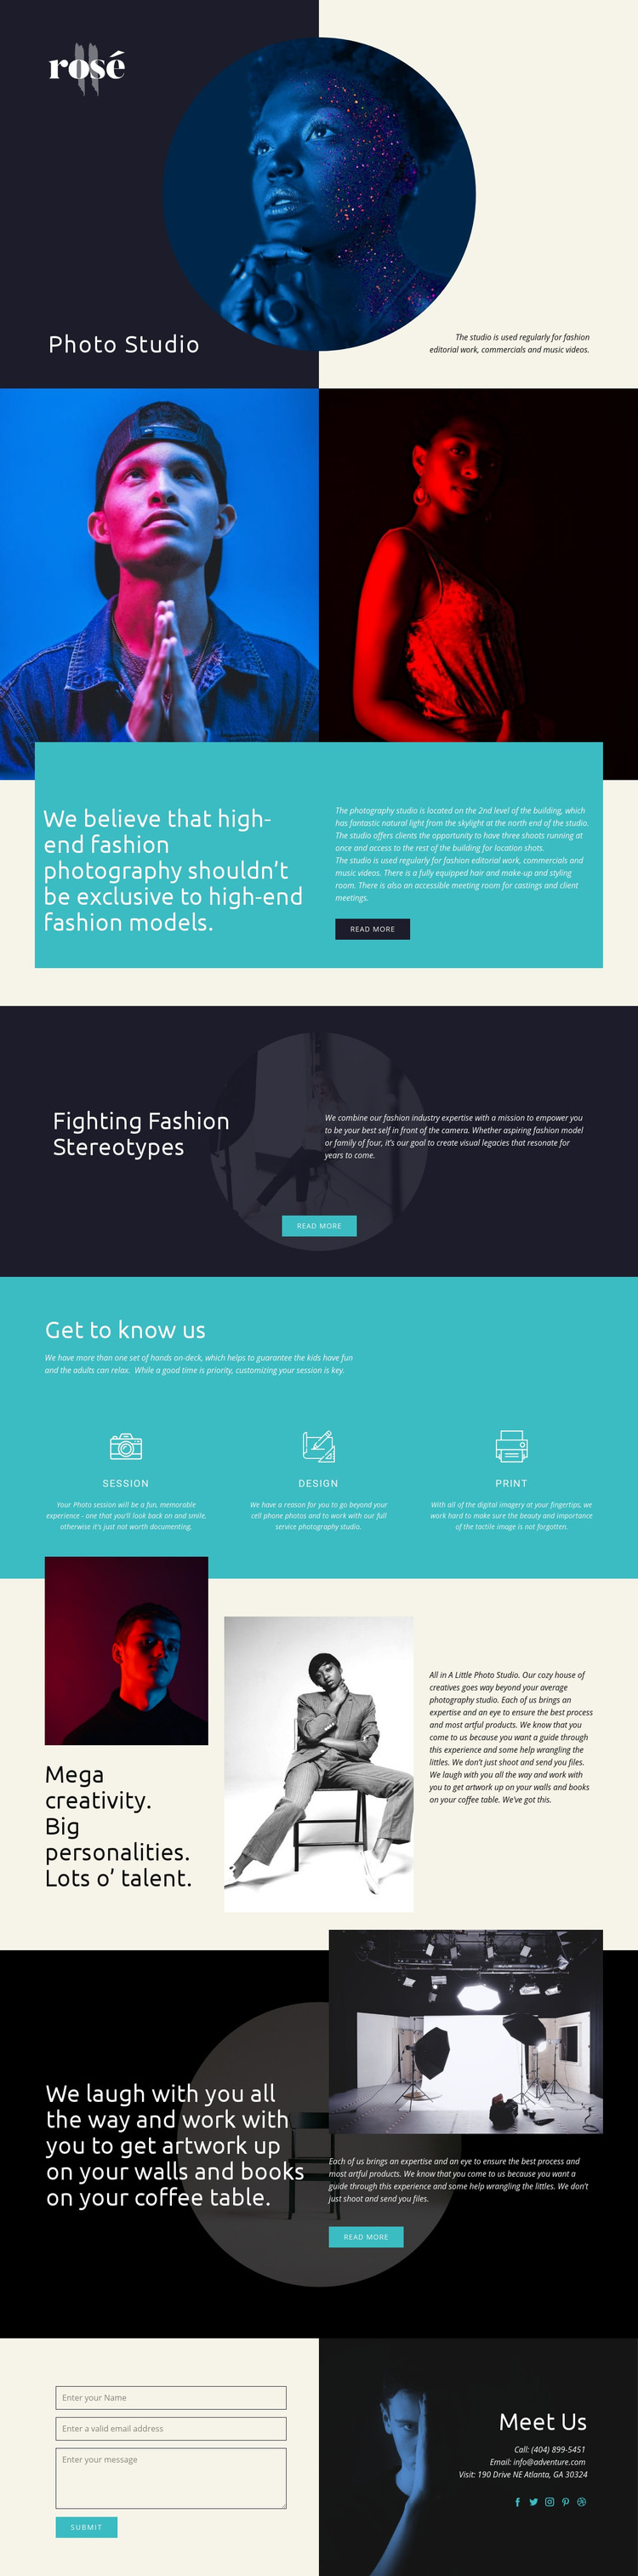 Rose Homepage Design